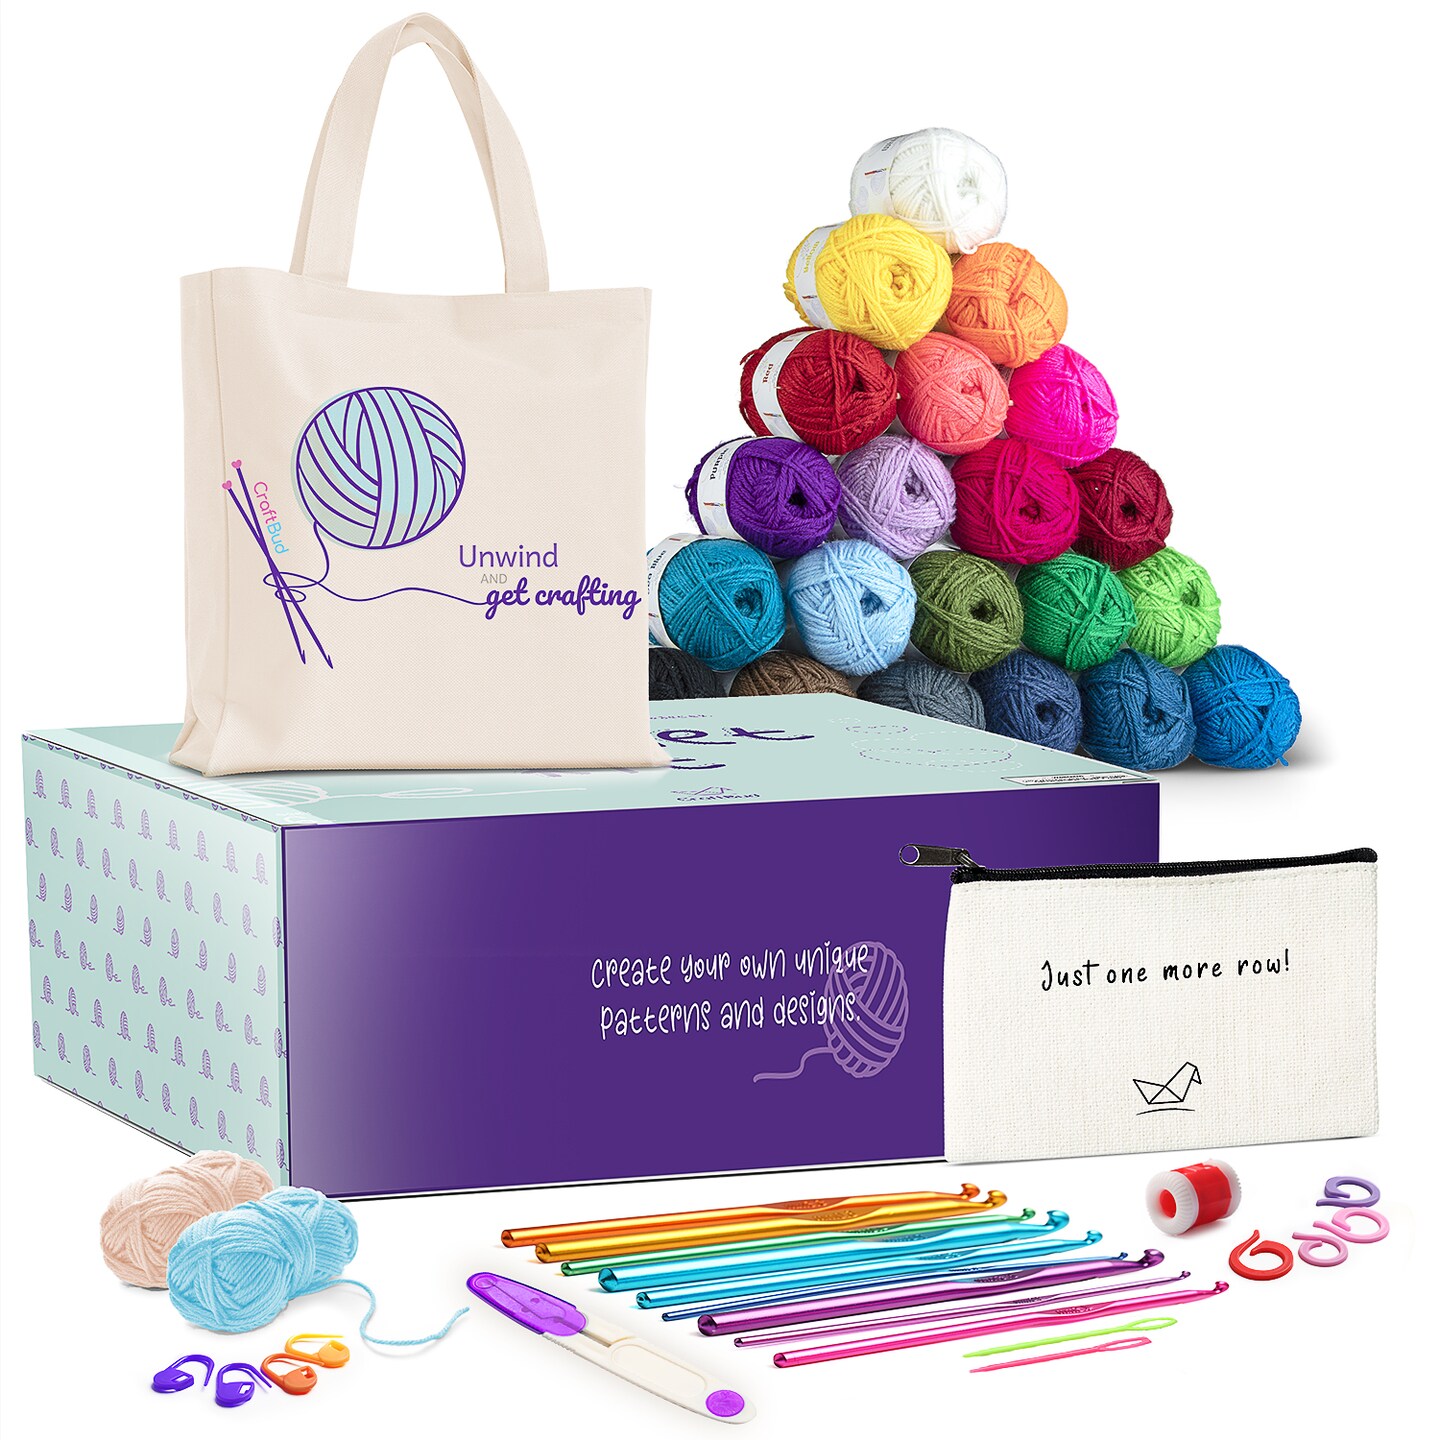 Buy Knitting and Crochet Books, Patterns & Kits Online